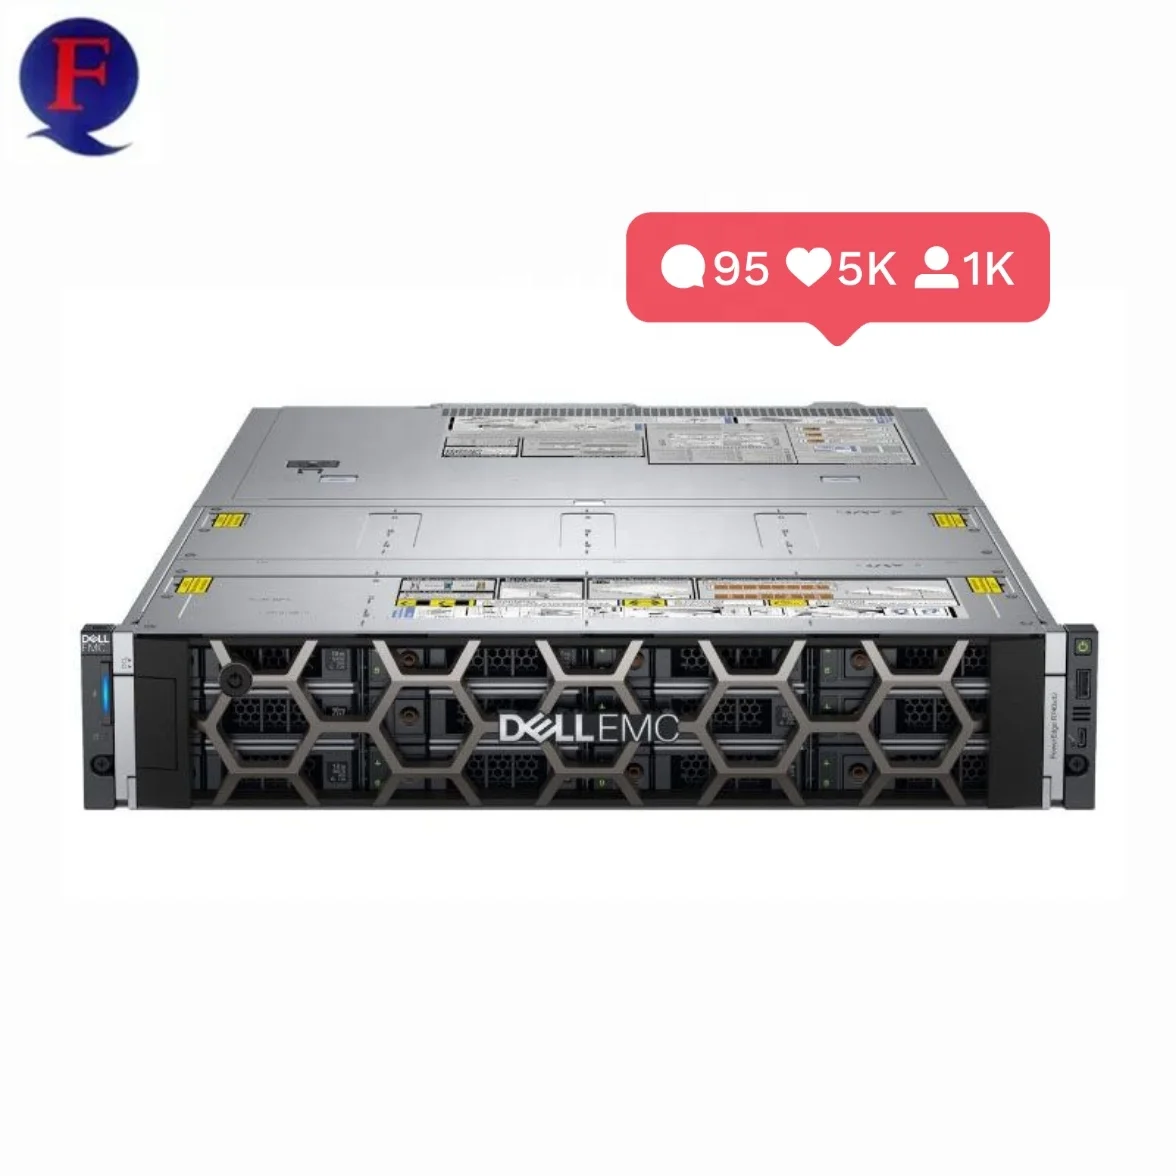 

Dell PowerEdge R740 2u Server Case Chassis Rack Server Poweredge R740 Server Rack